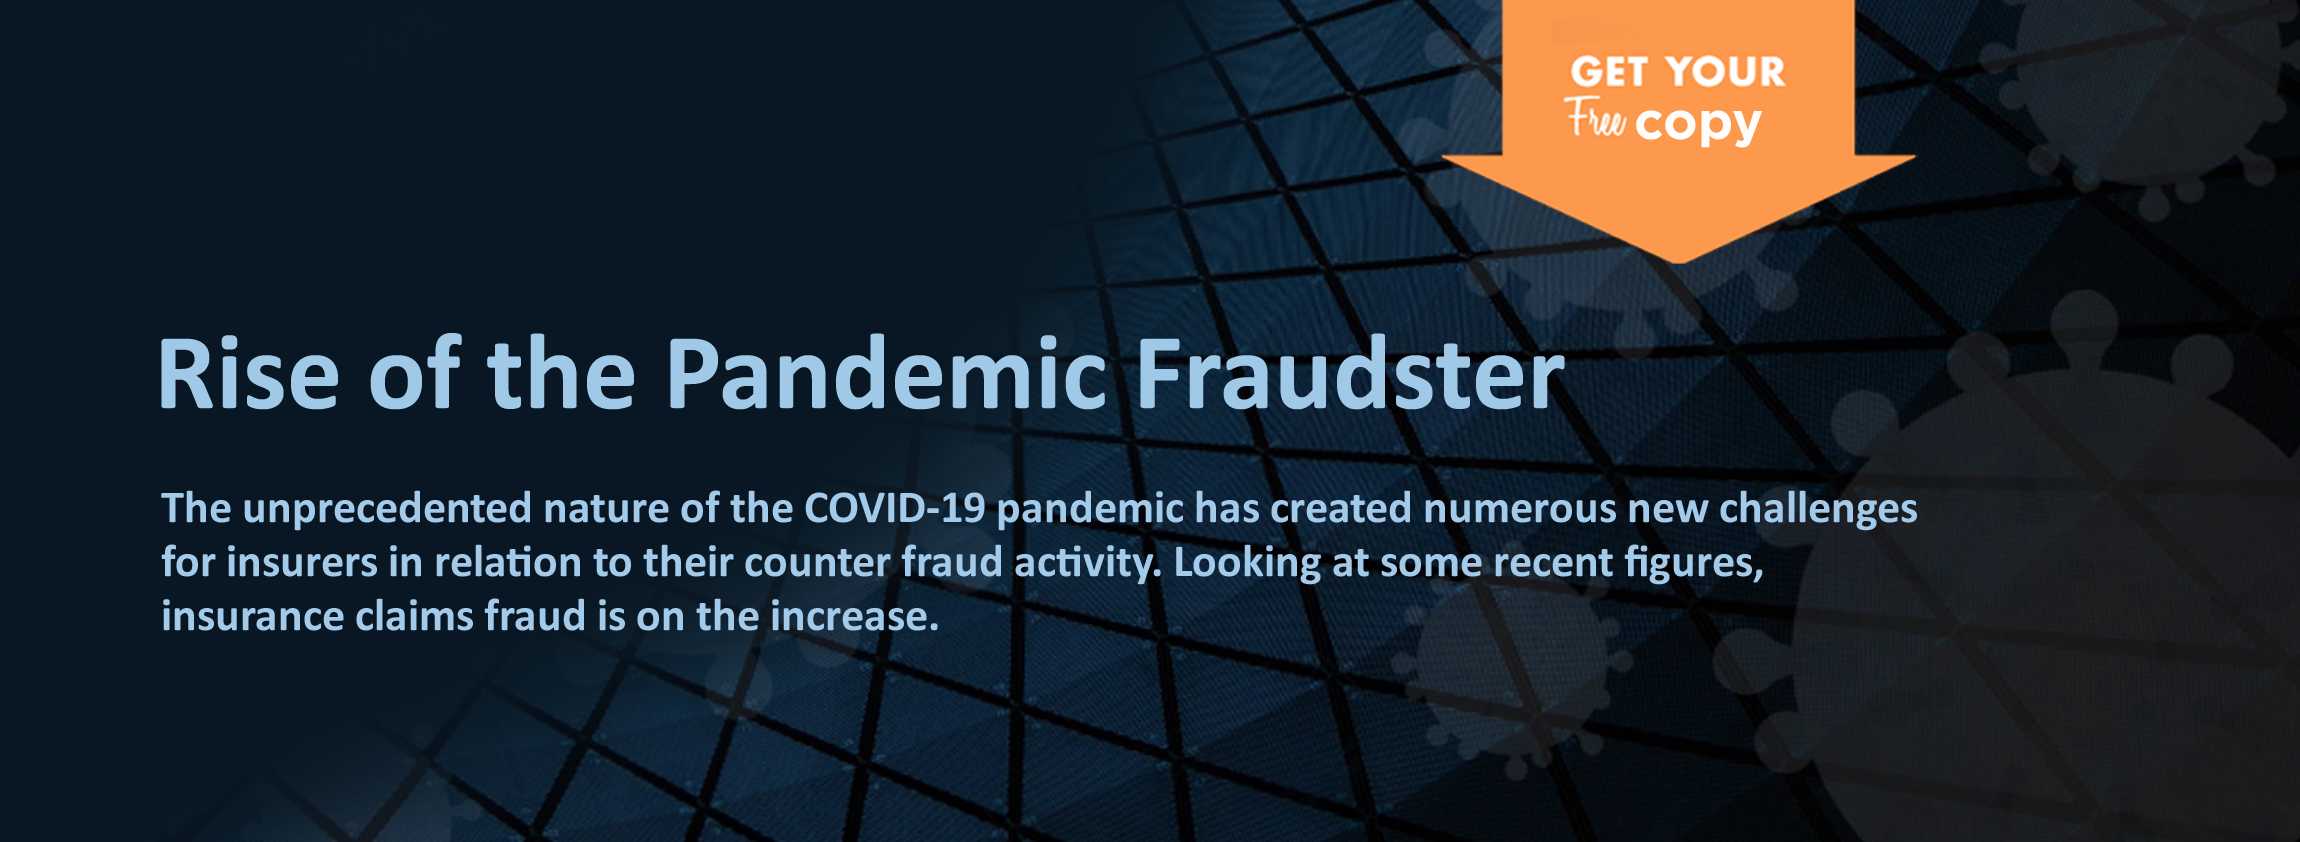 top-landing-rise-pandemic-fraudster-7-1